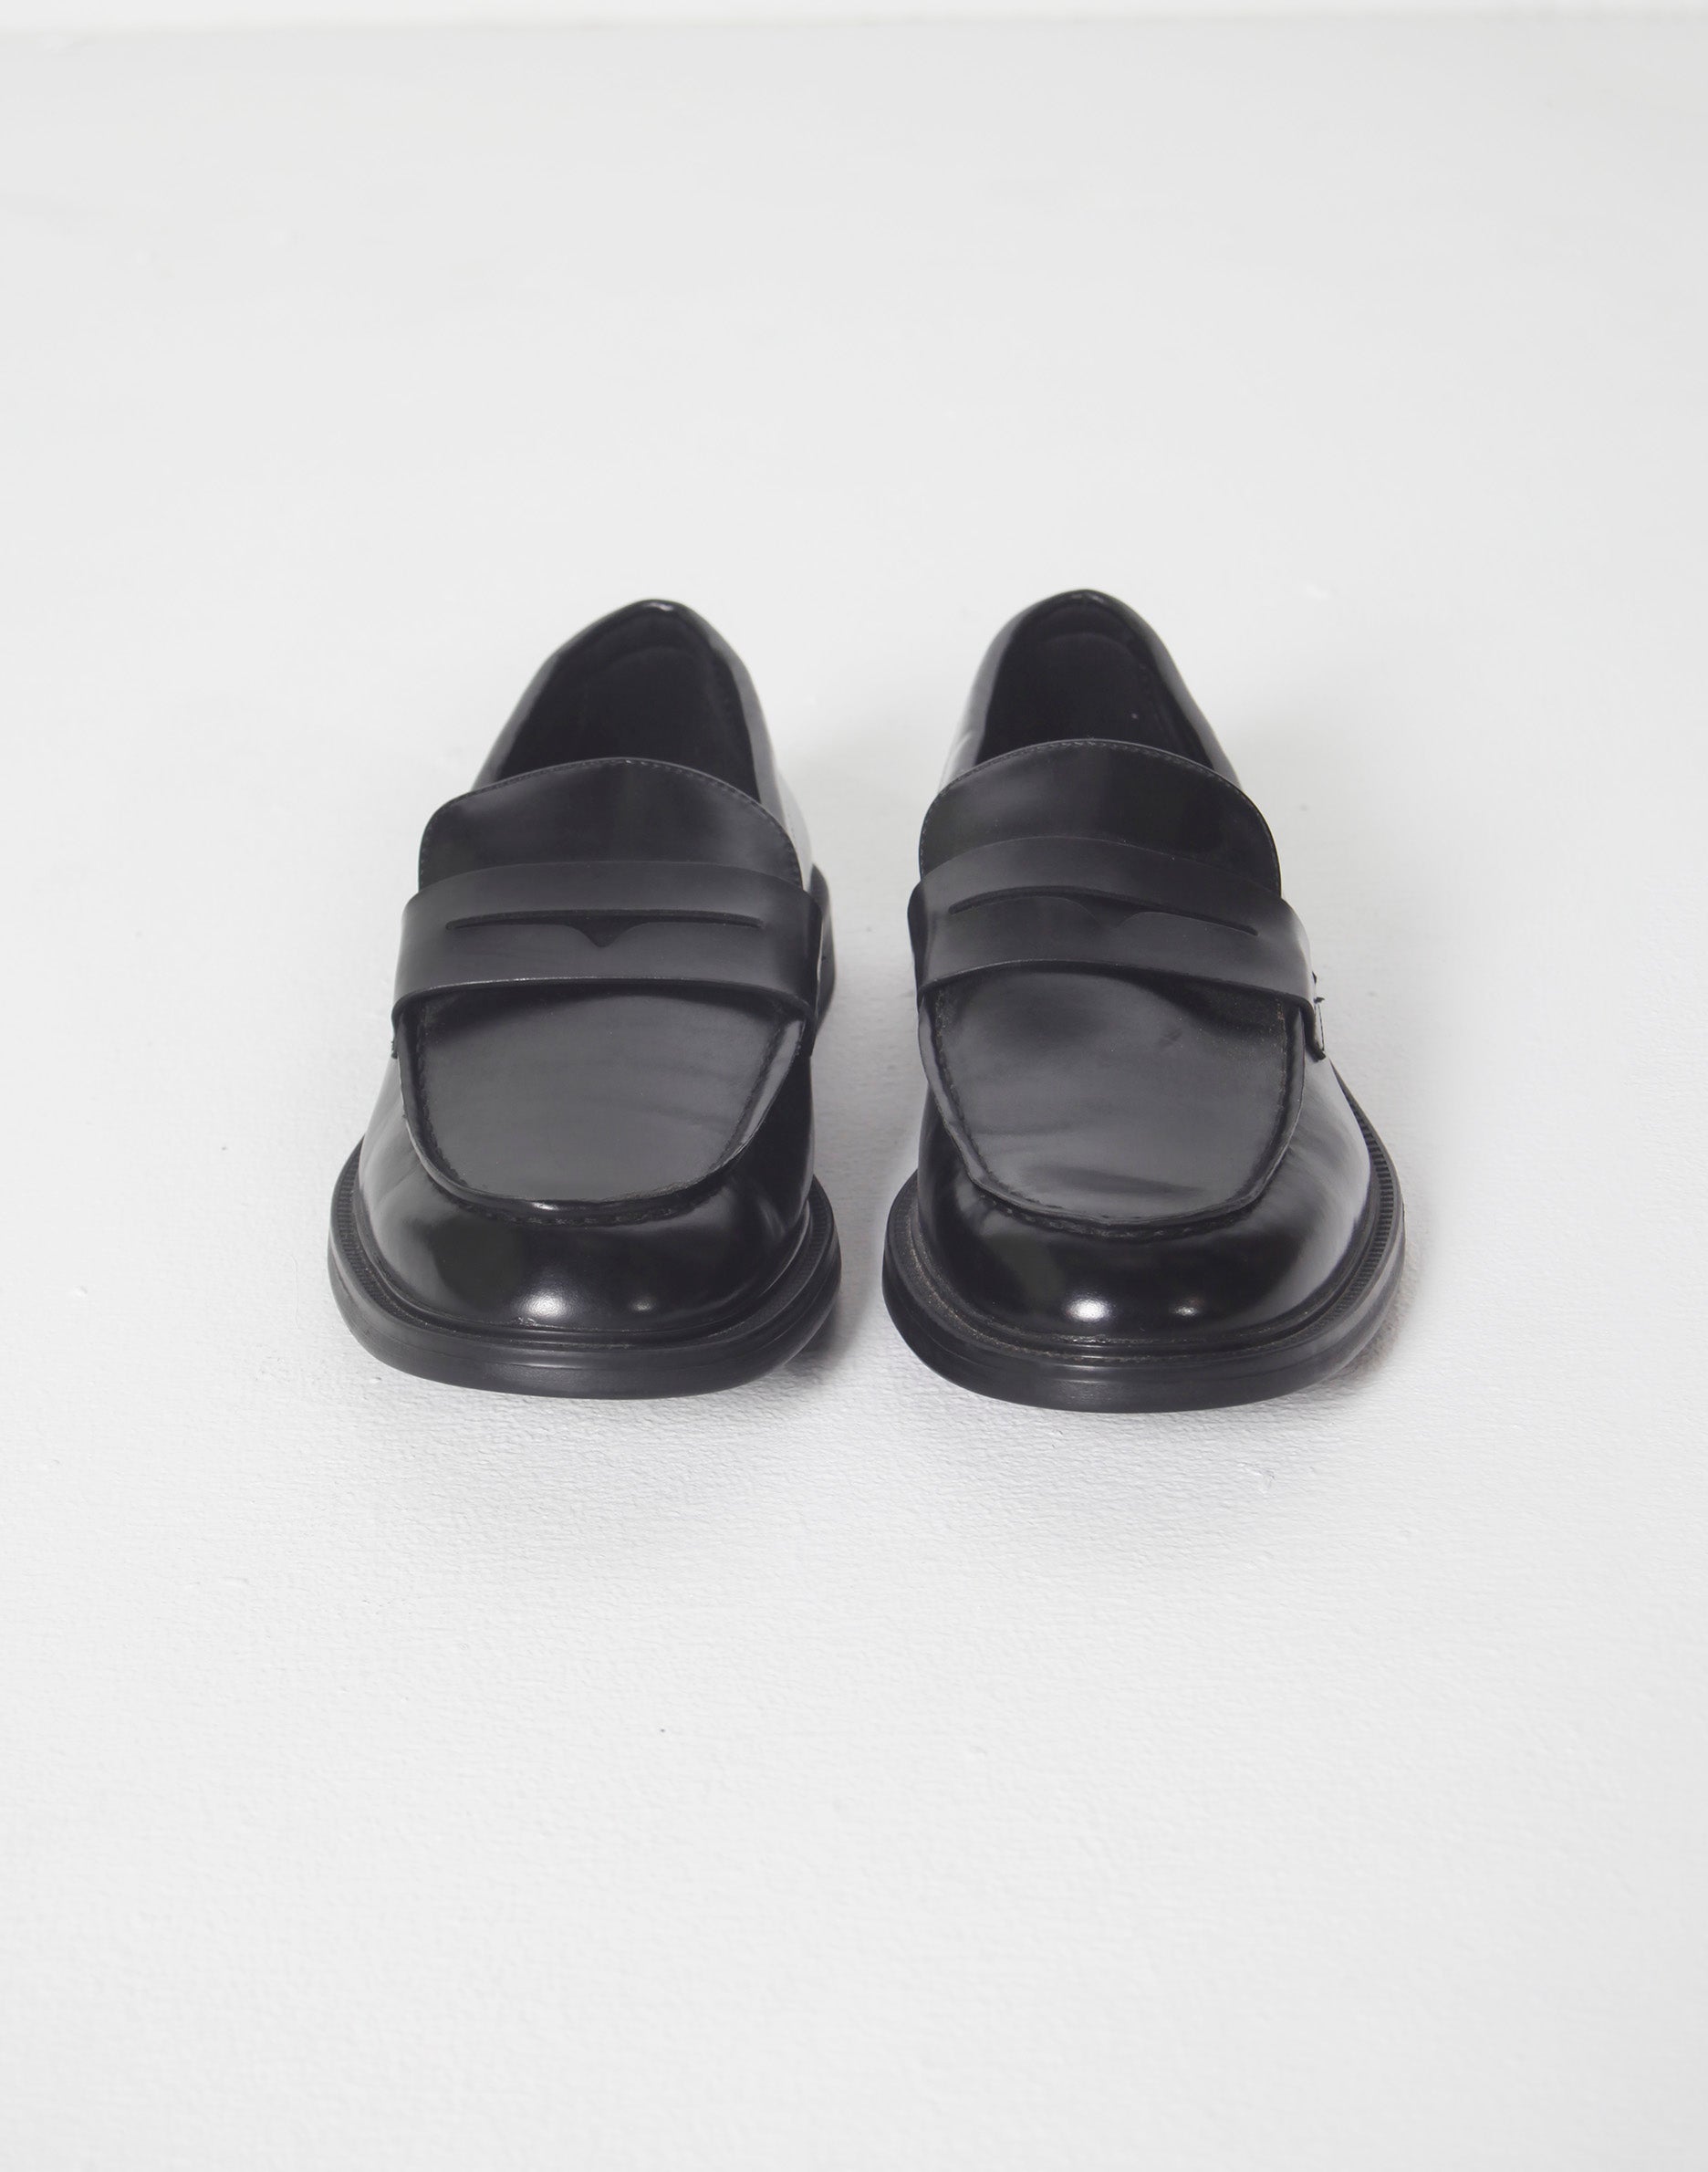 Men's Black Loafers (Eu44)